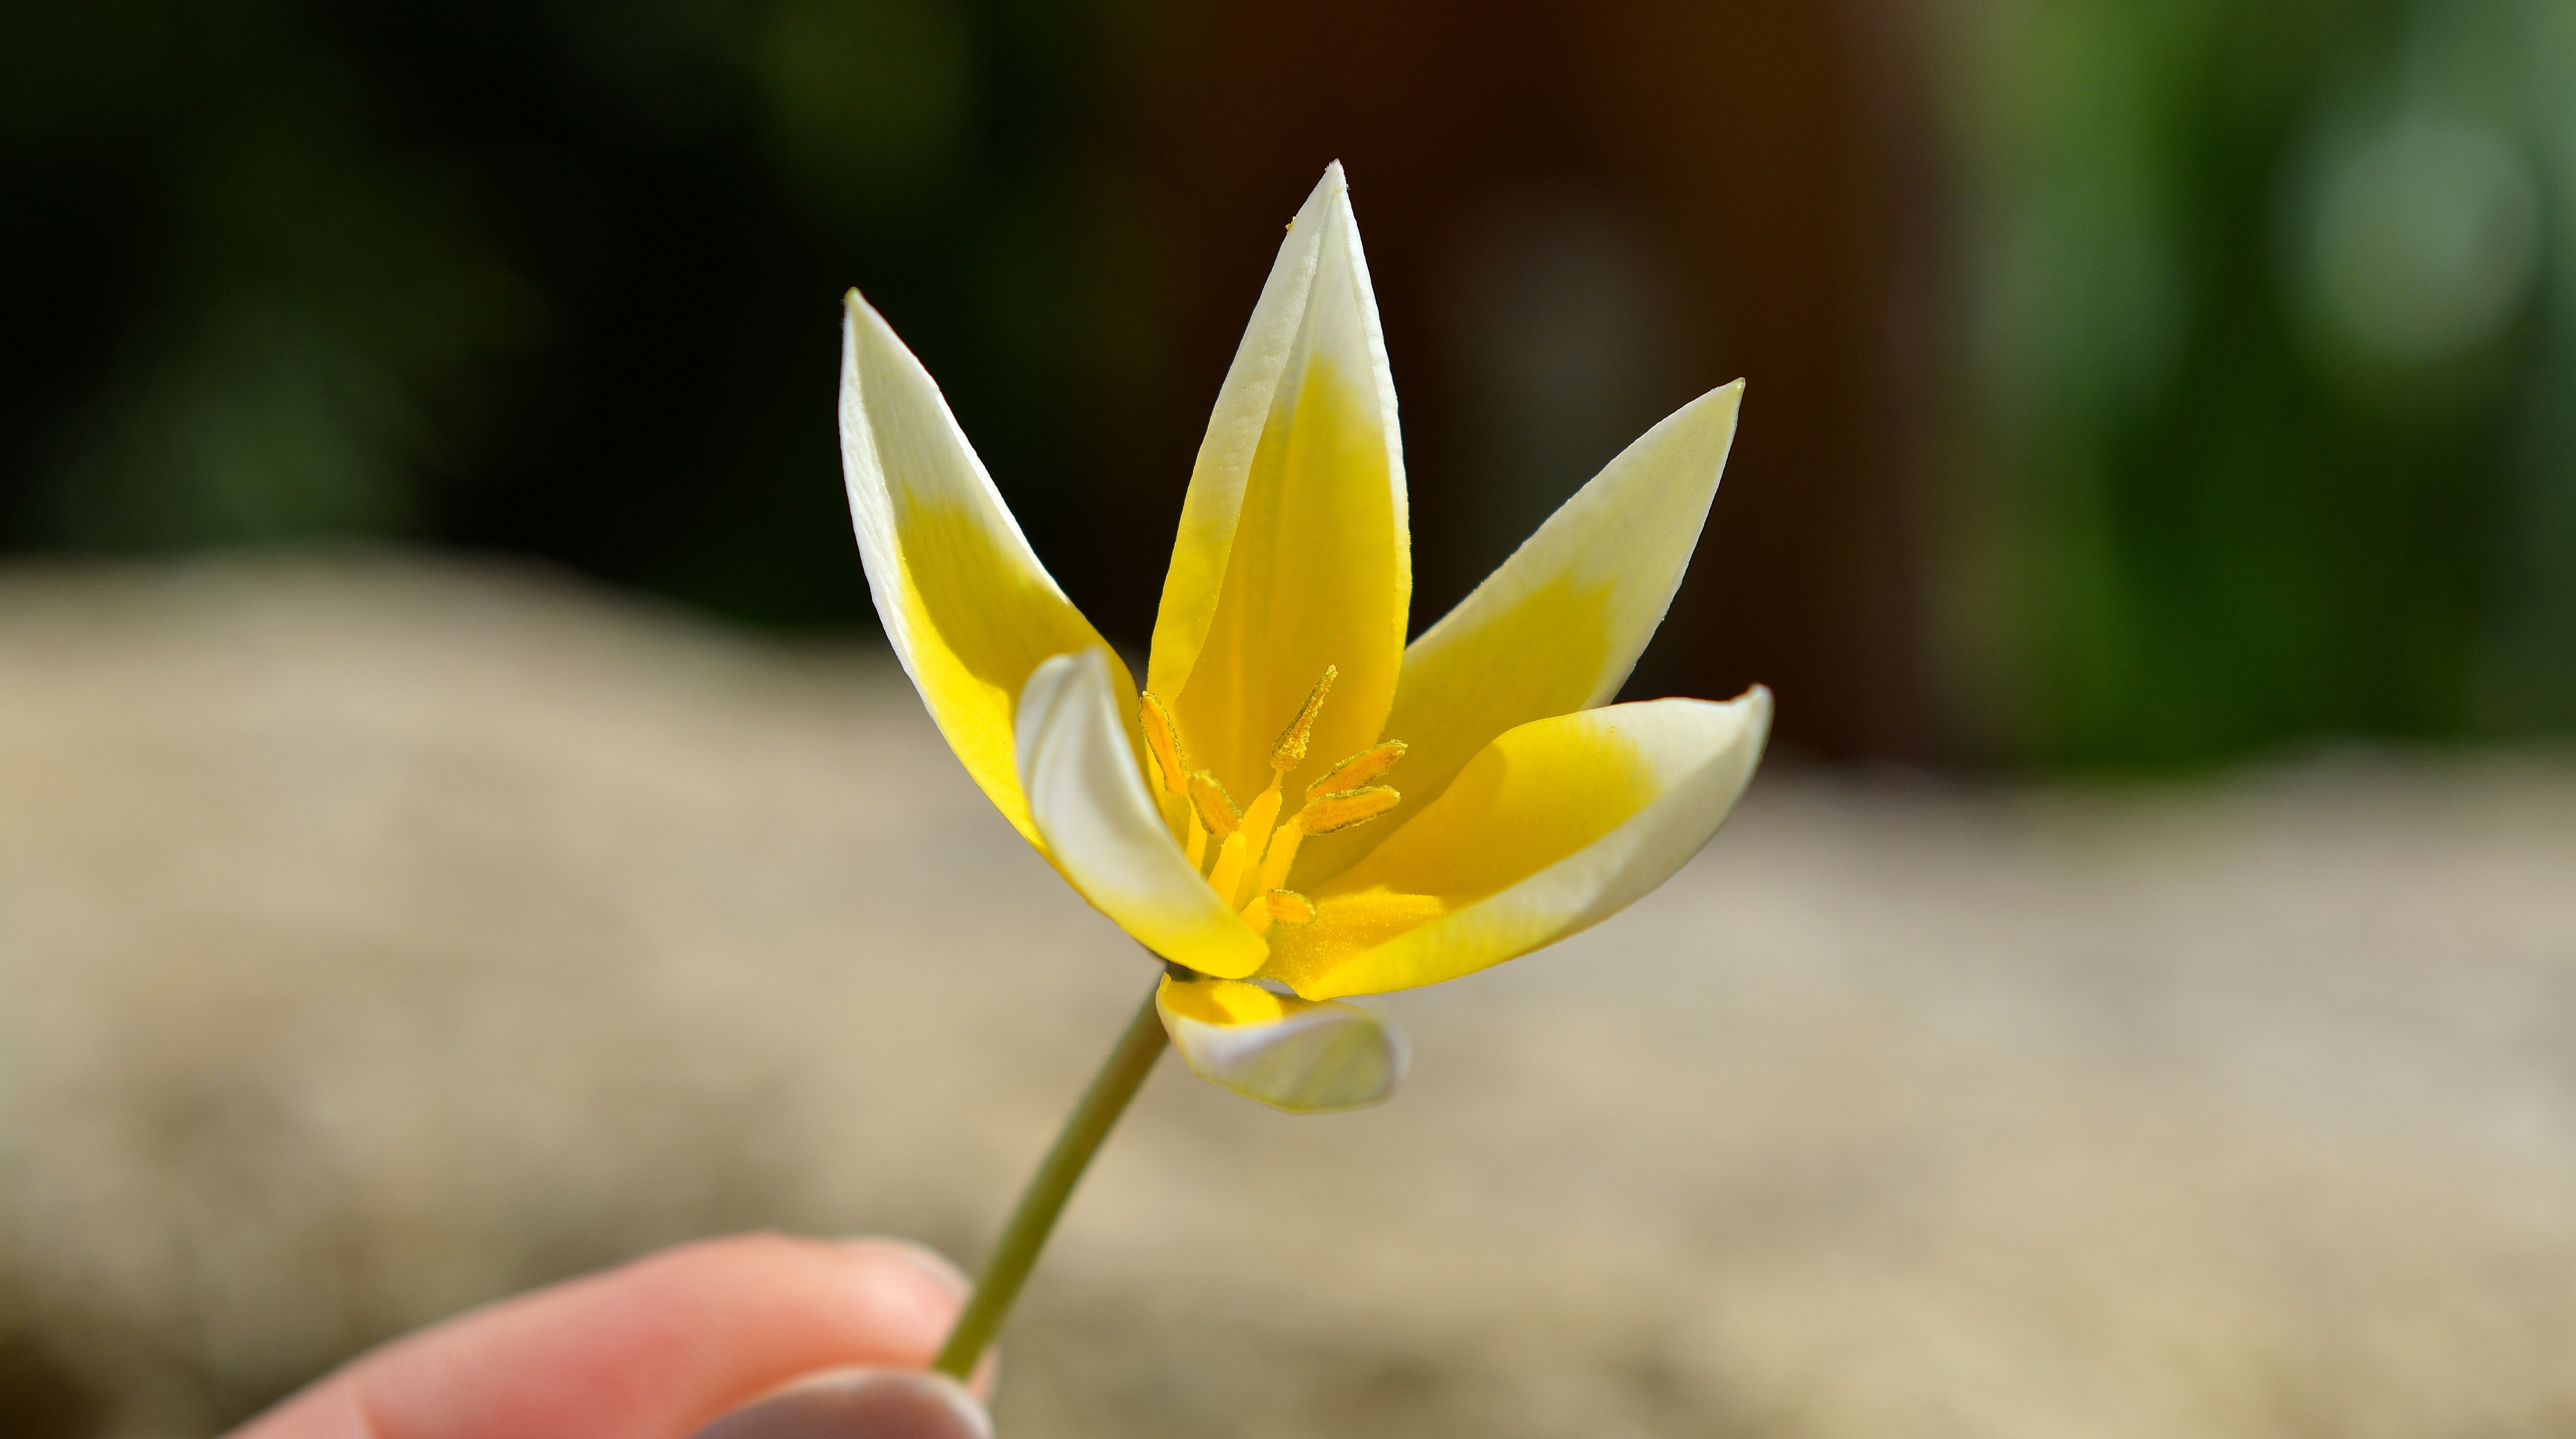 yellow white 5 petaled flower